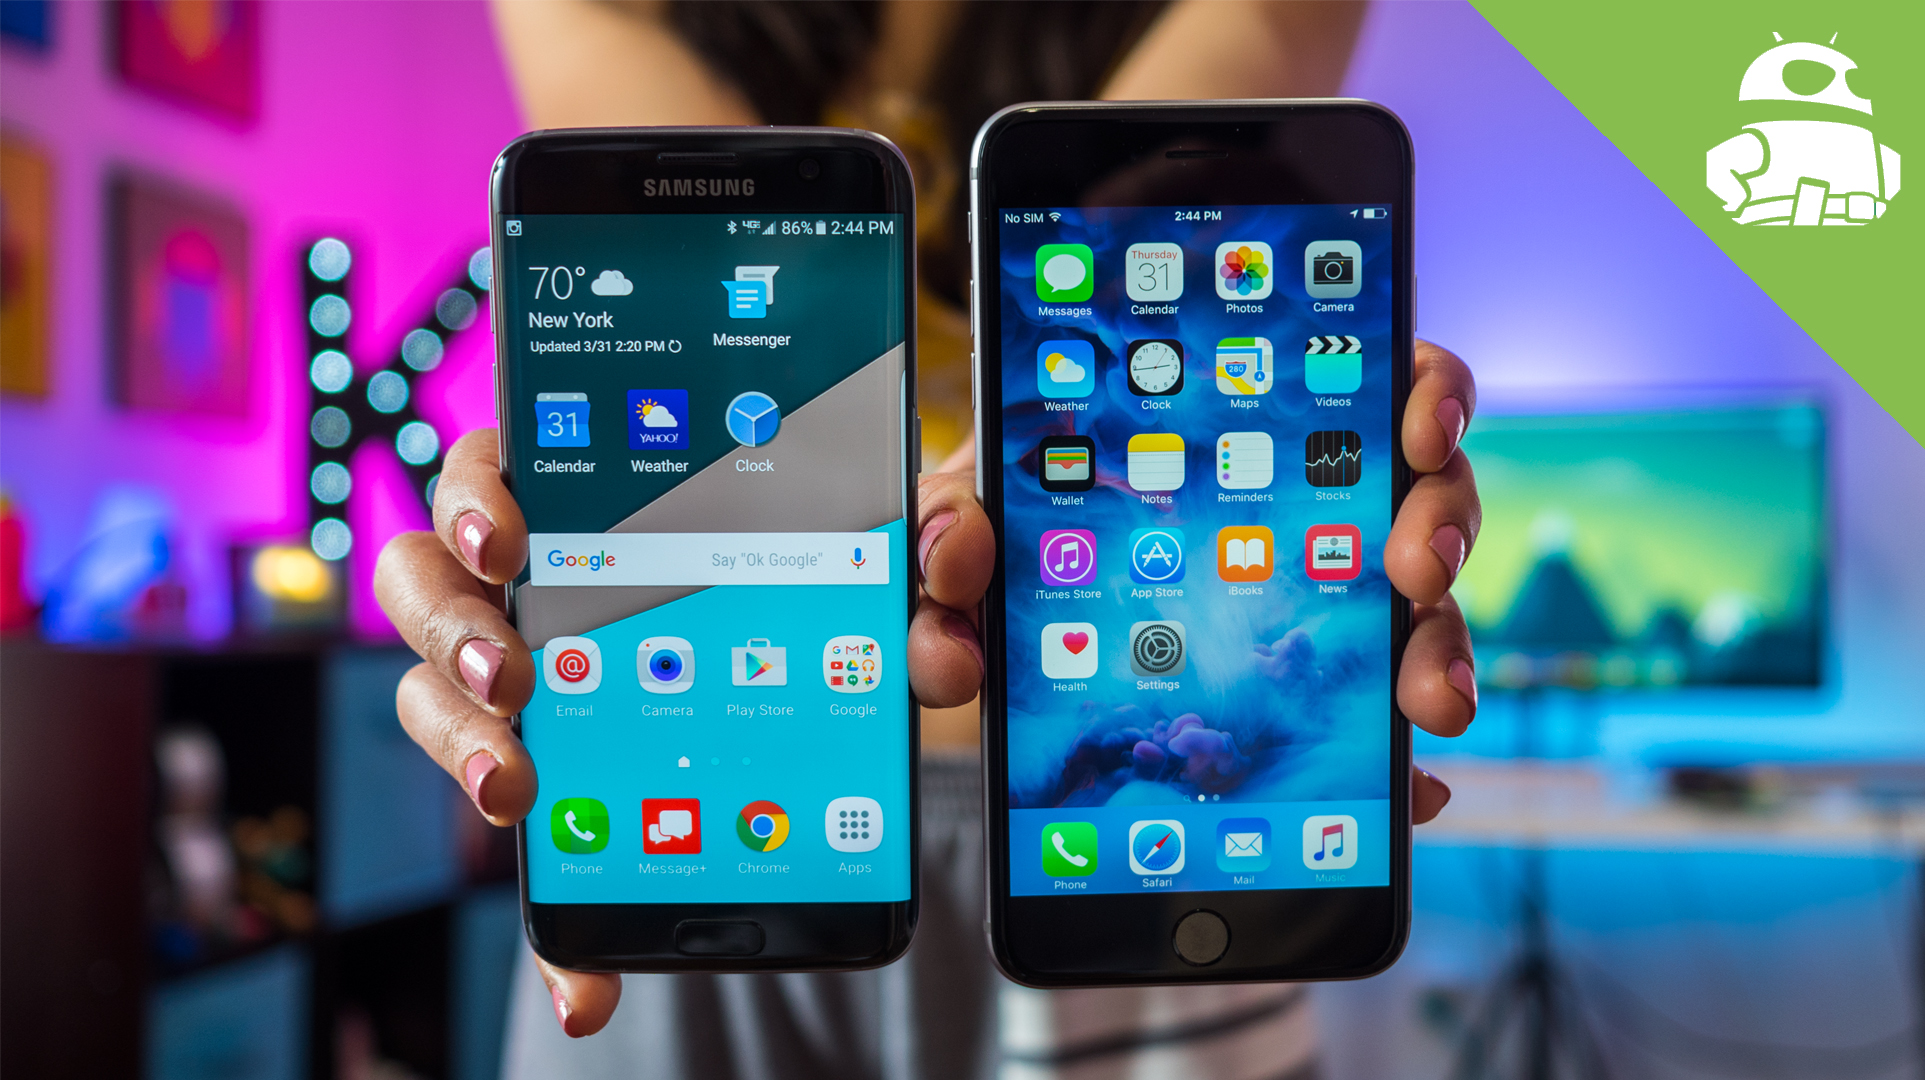 Galaxy-S7-Edge-vs-iPhone-6s-plus-thumbnail